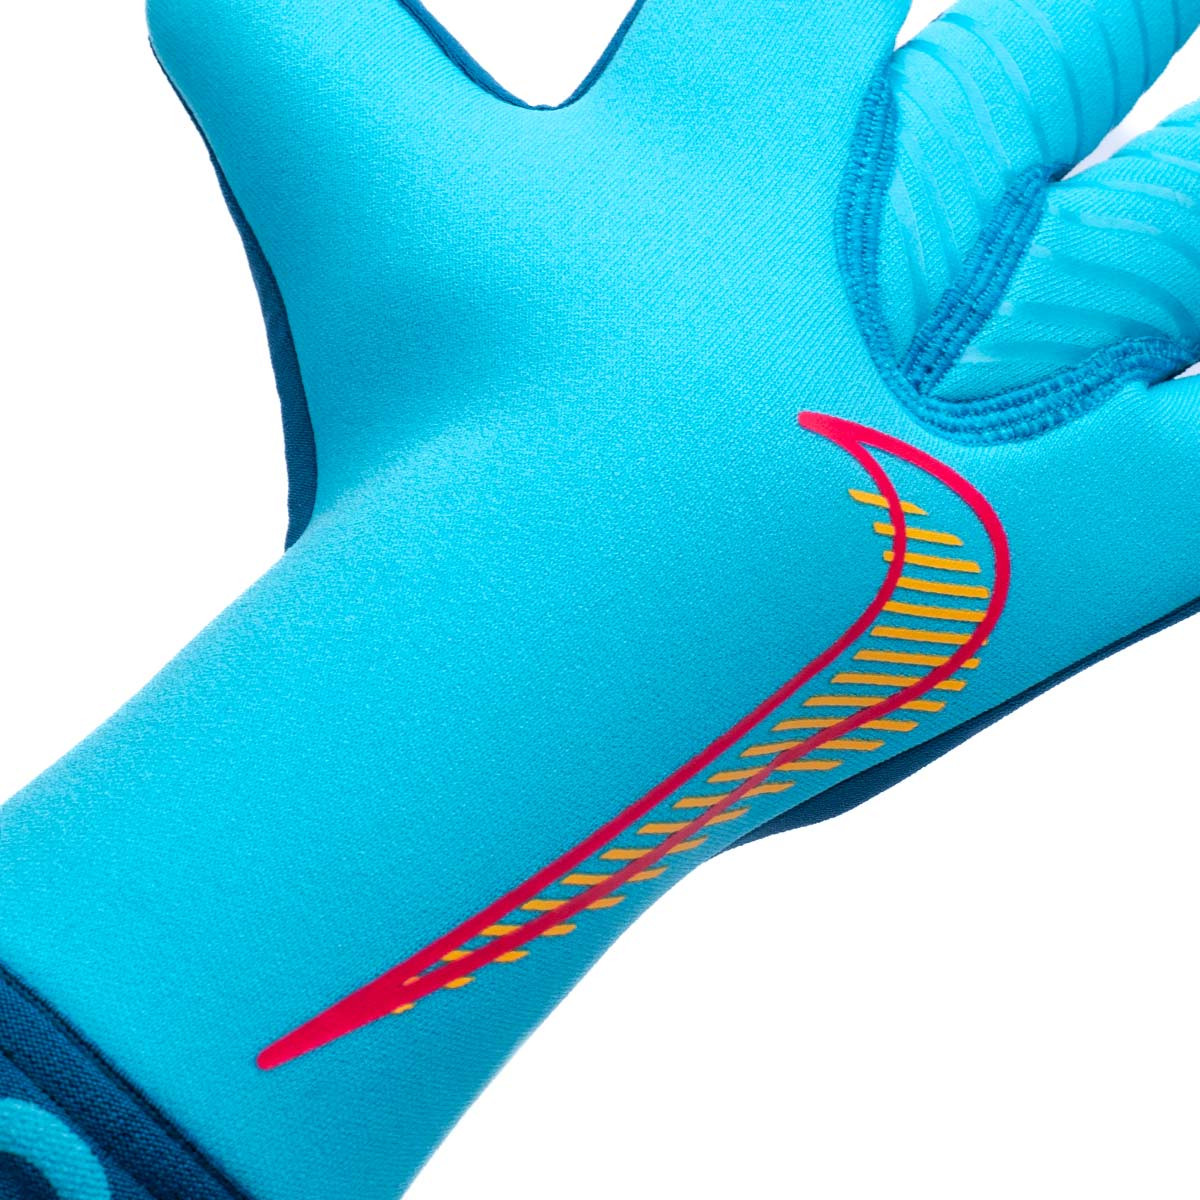 Guante portero Nike Mercurial Touch Victory Chlorine Blue-Marina-Siren - Emotion